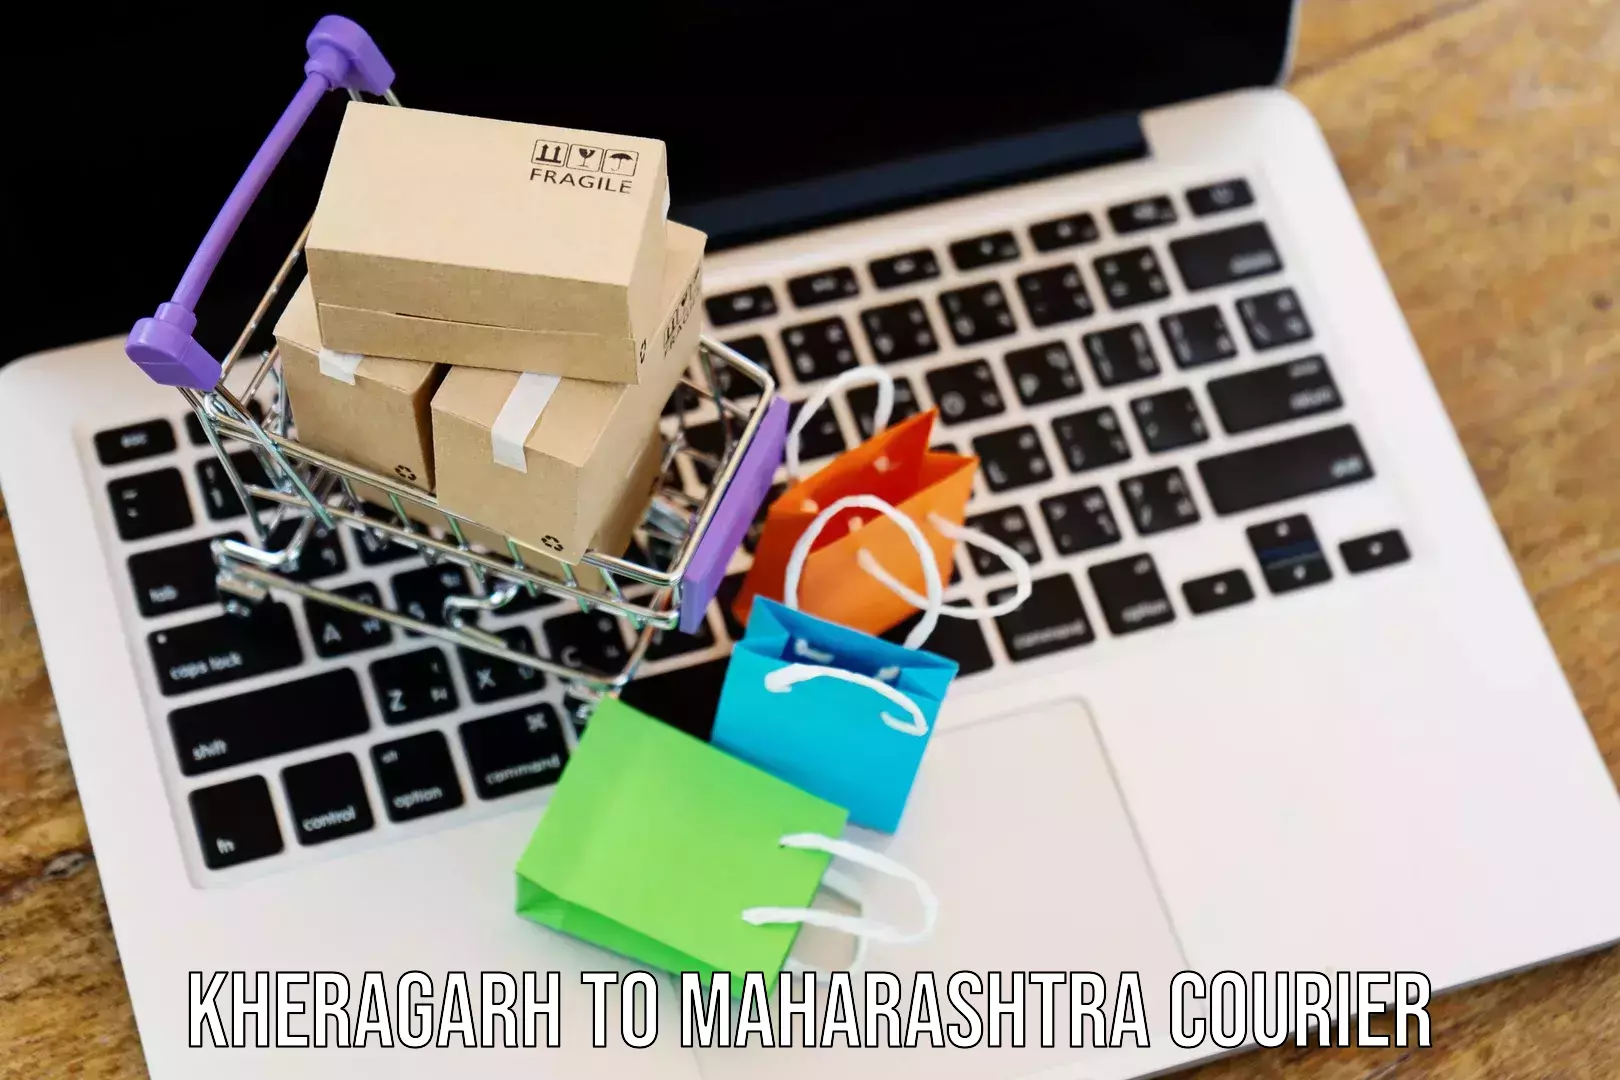 Courier service innovation Kheragarh to Ambajogai